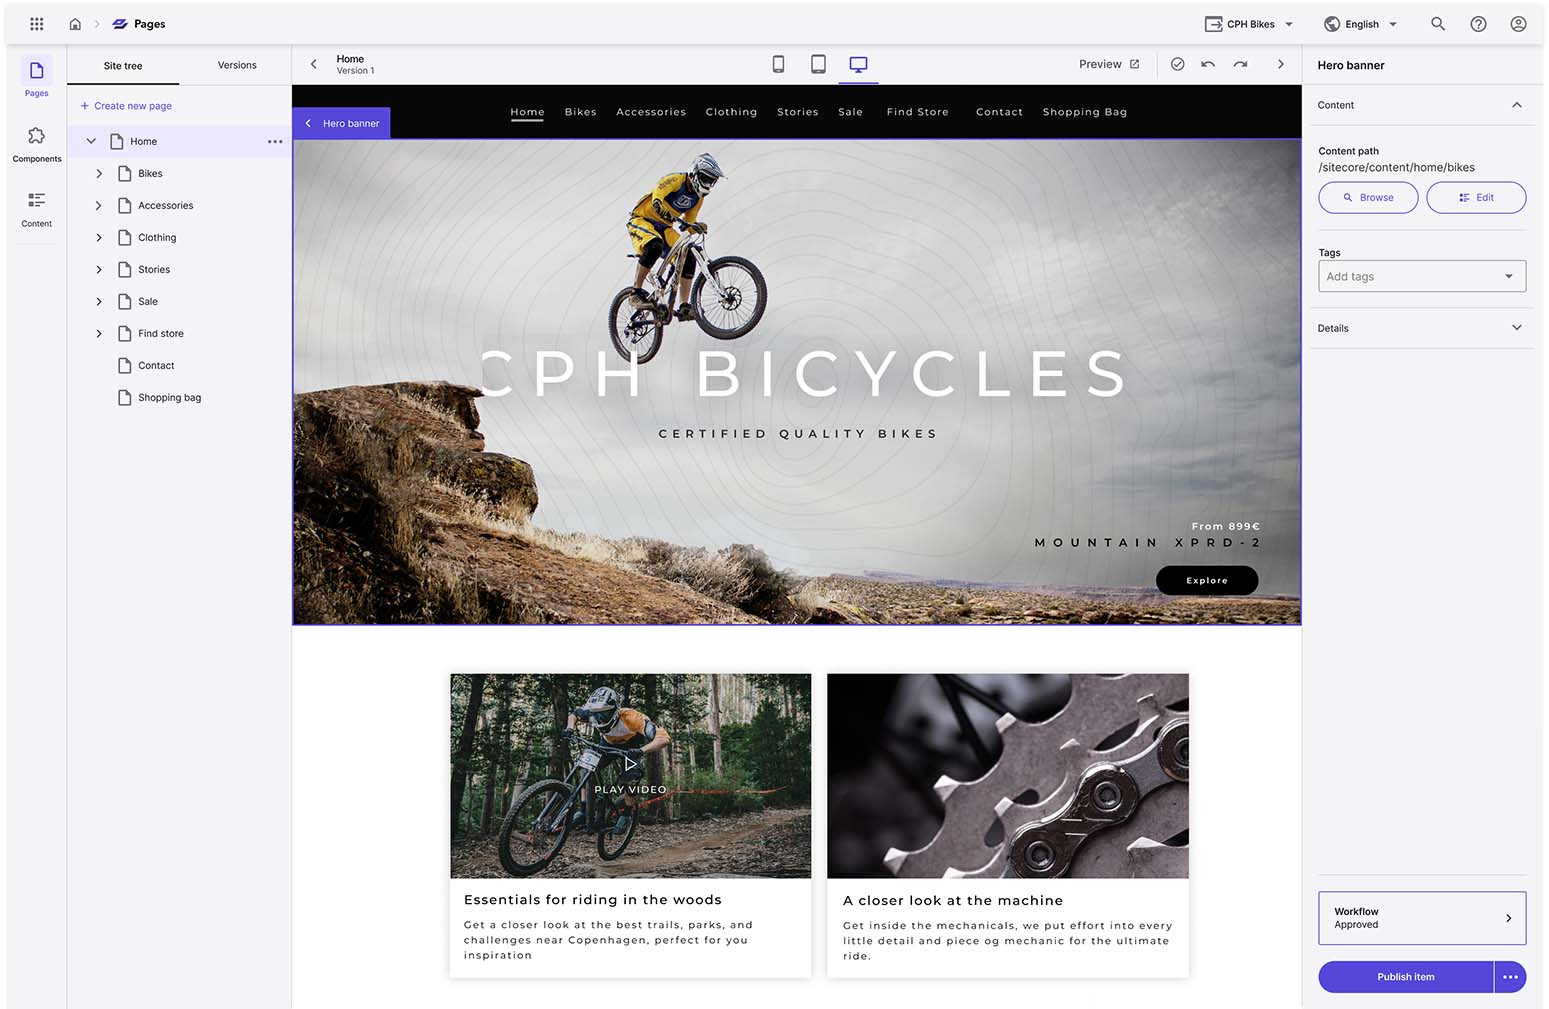 sitecore sym 2022 recap blog by Blastic cph bicycles